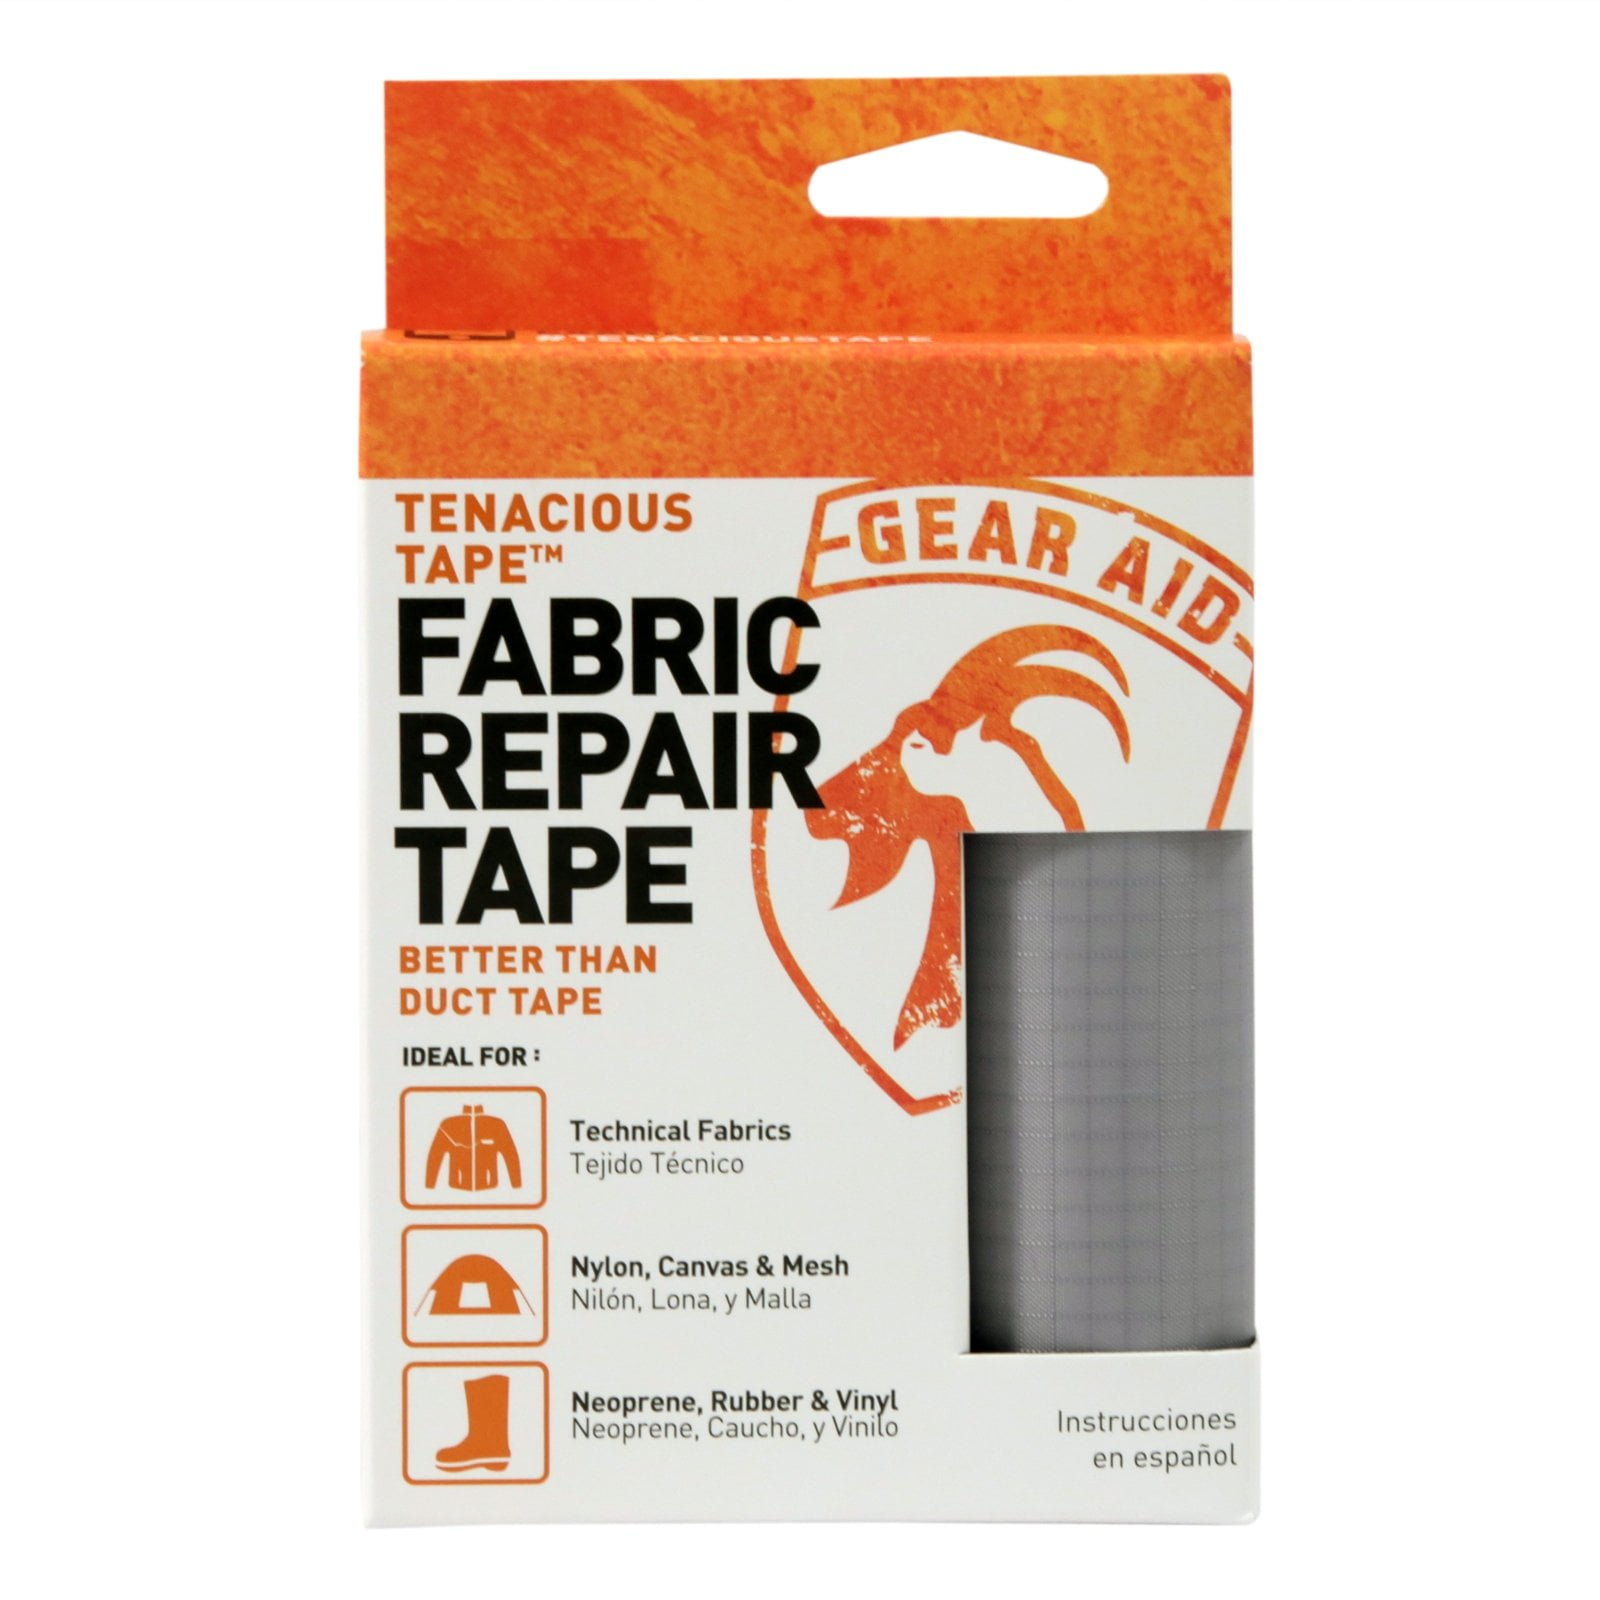 Gear Aid Tenacious Tape for Fabric Repair Platinum Nylon - NEW